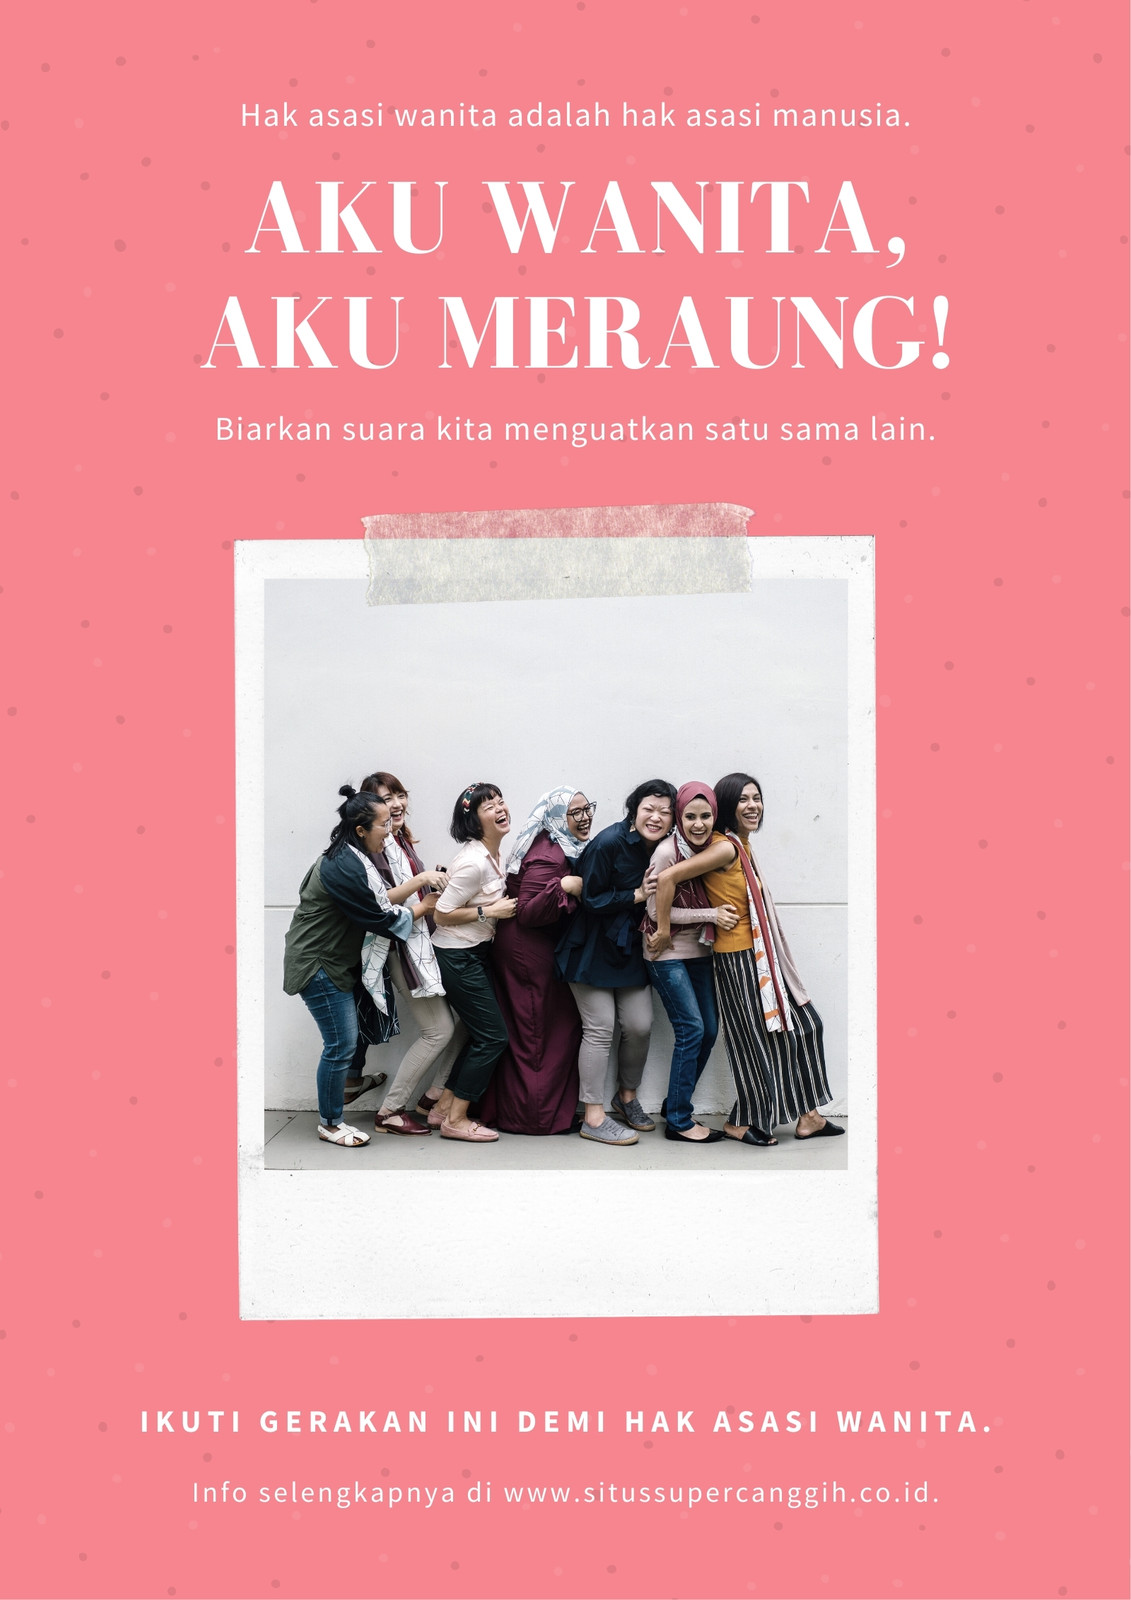 Poster Hak Asasi Wanita Bingkai Foto Berselotip Polkadot Merah Muda